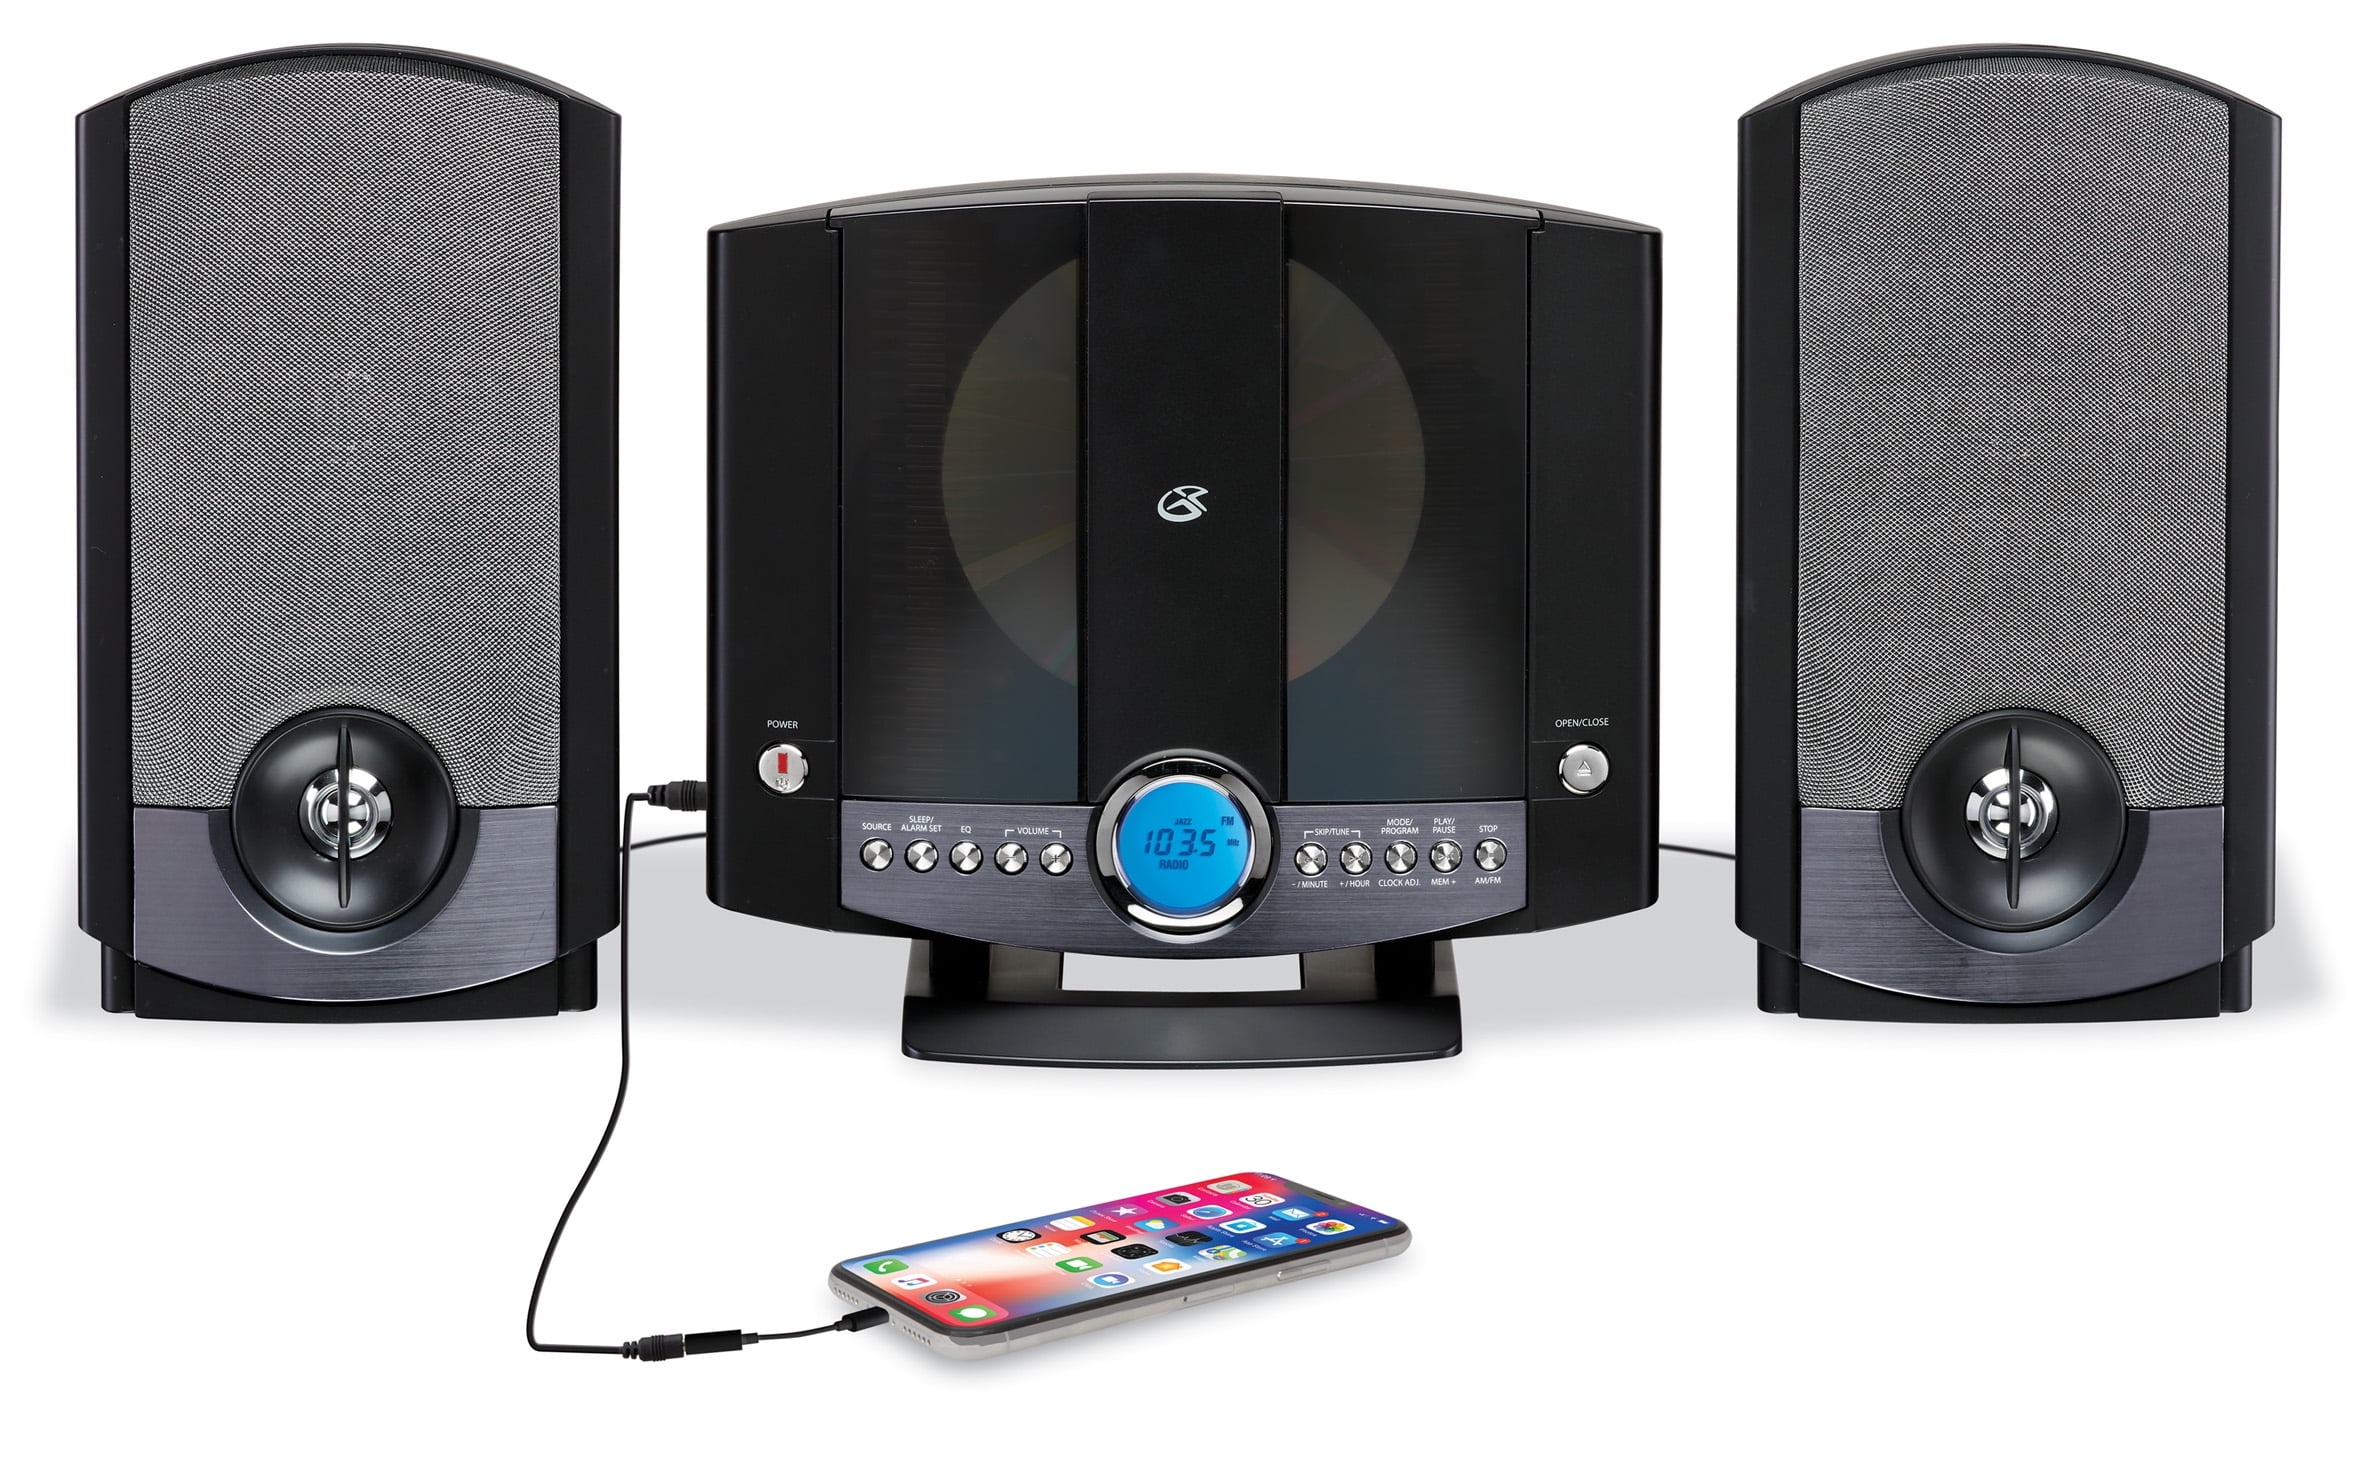 GPX Desktop Hi-Fi Home Audio Cd Player & Digital AM/FM Radio Stereo Sound System 